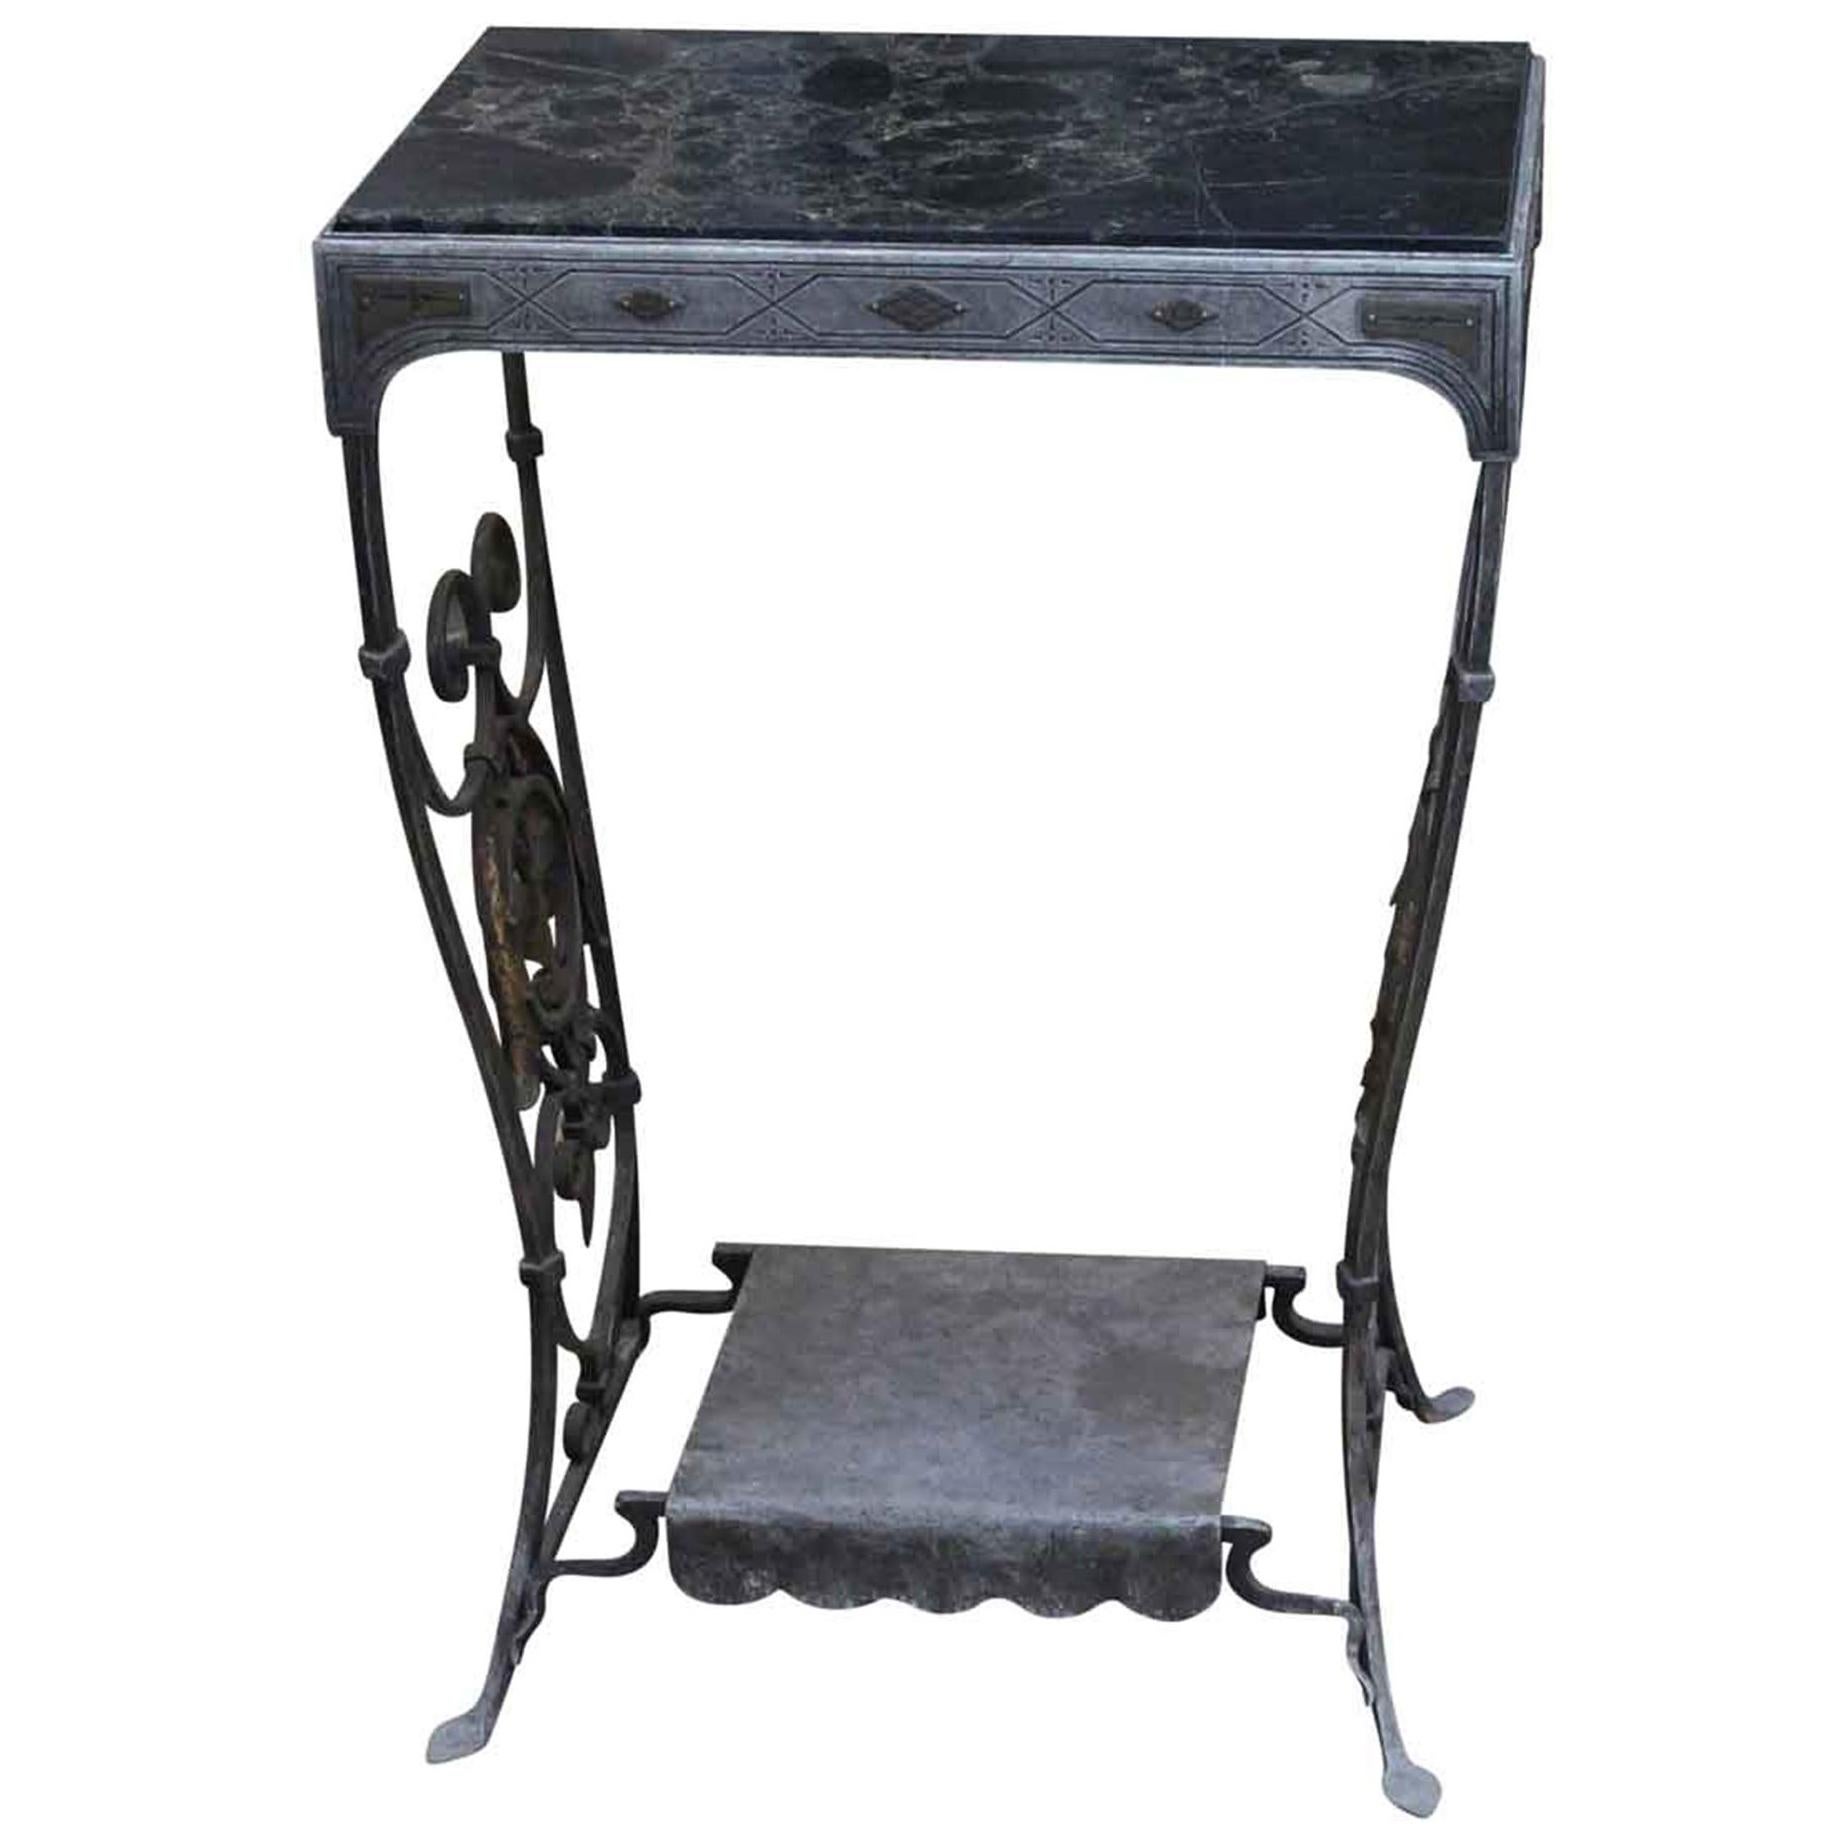 1920s Wrought Iron Table with Italian Portoro Marble Top